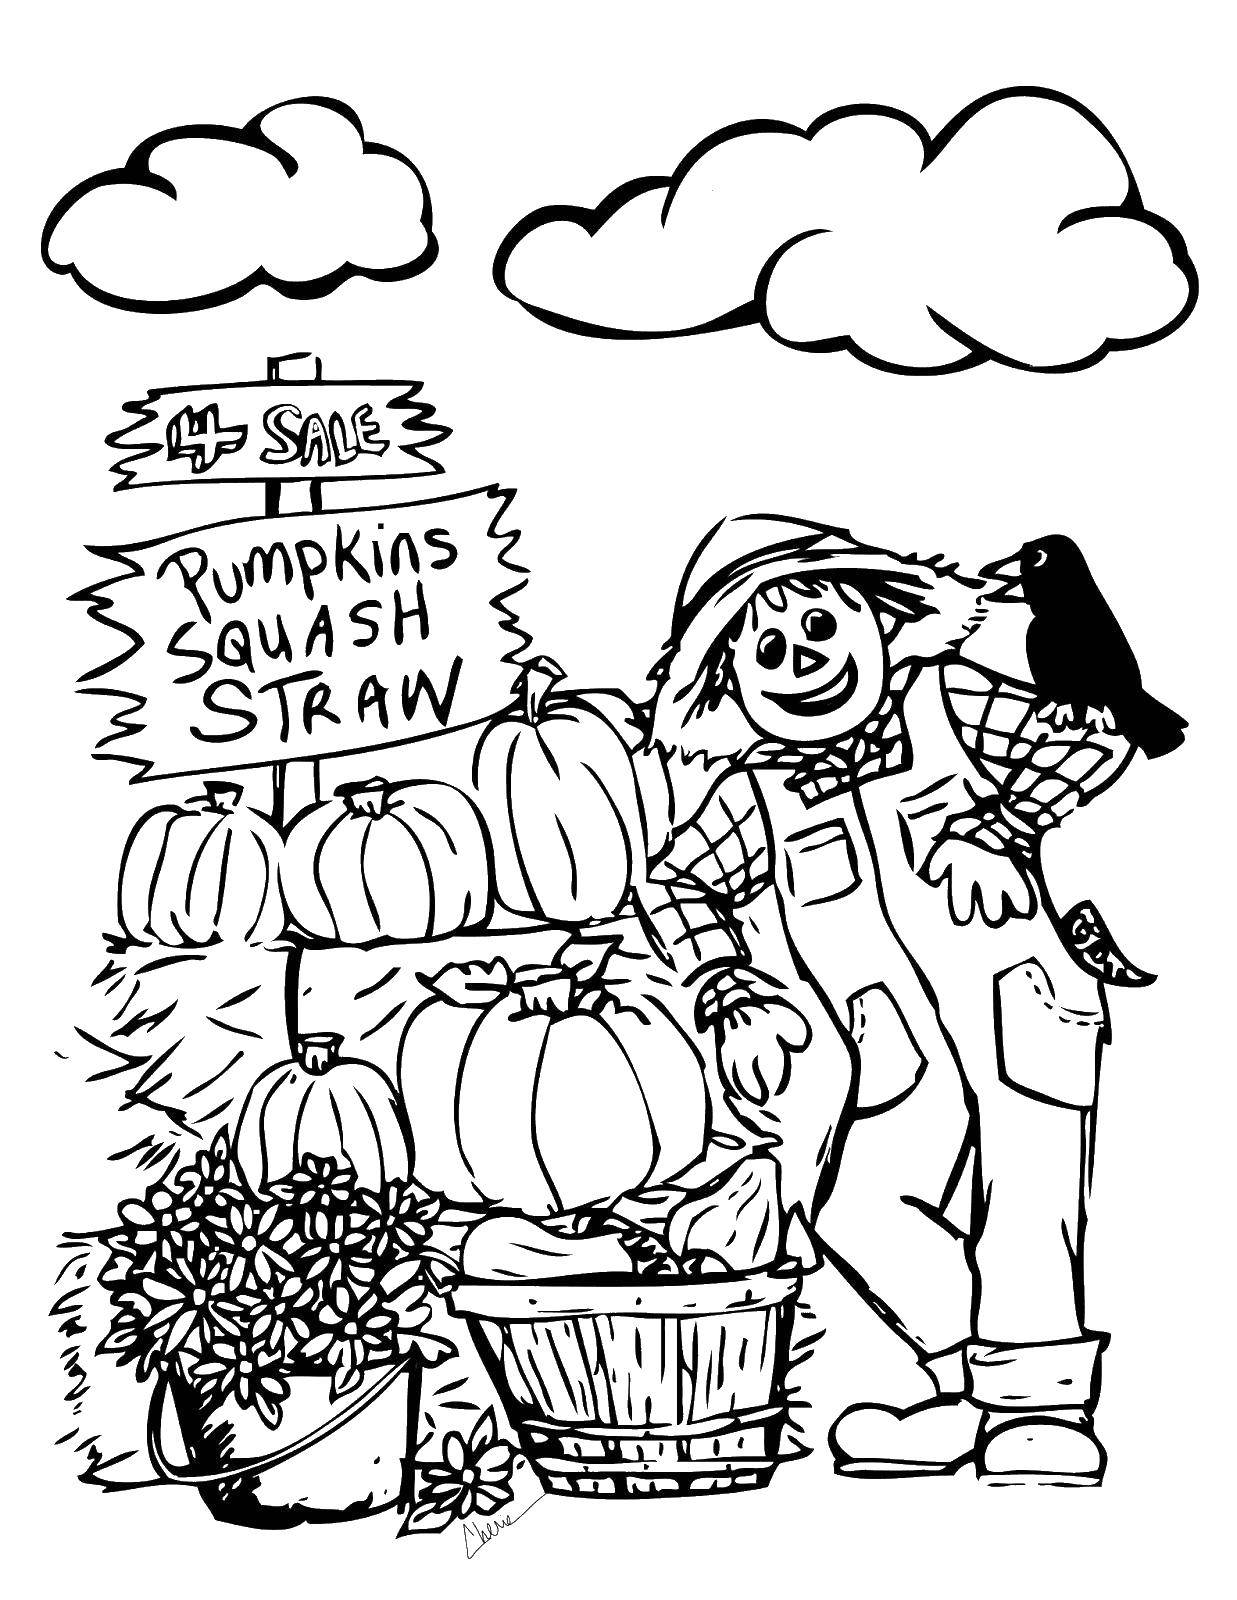 Coloring Stuffed sells pumpkins. Category Autumn. Tags:  pumpkin.